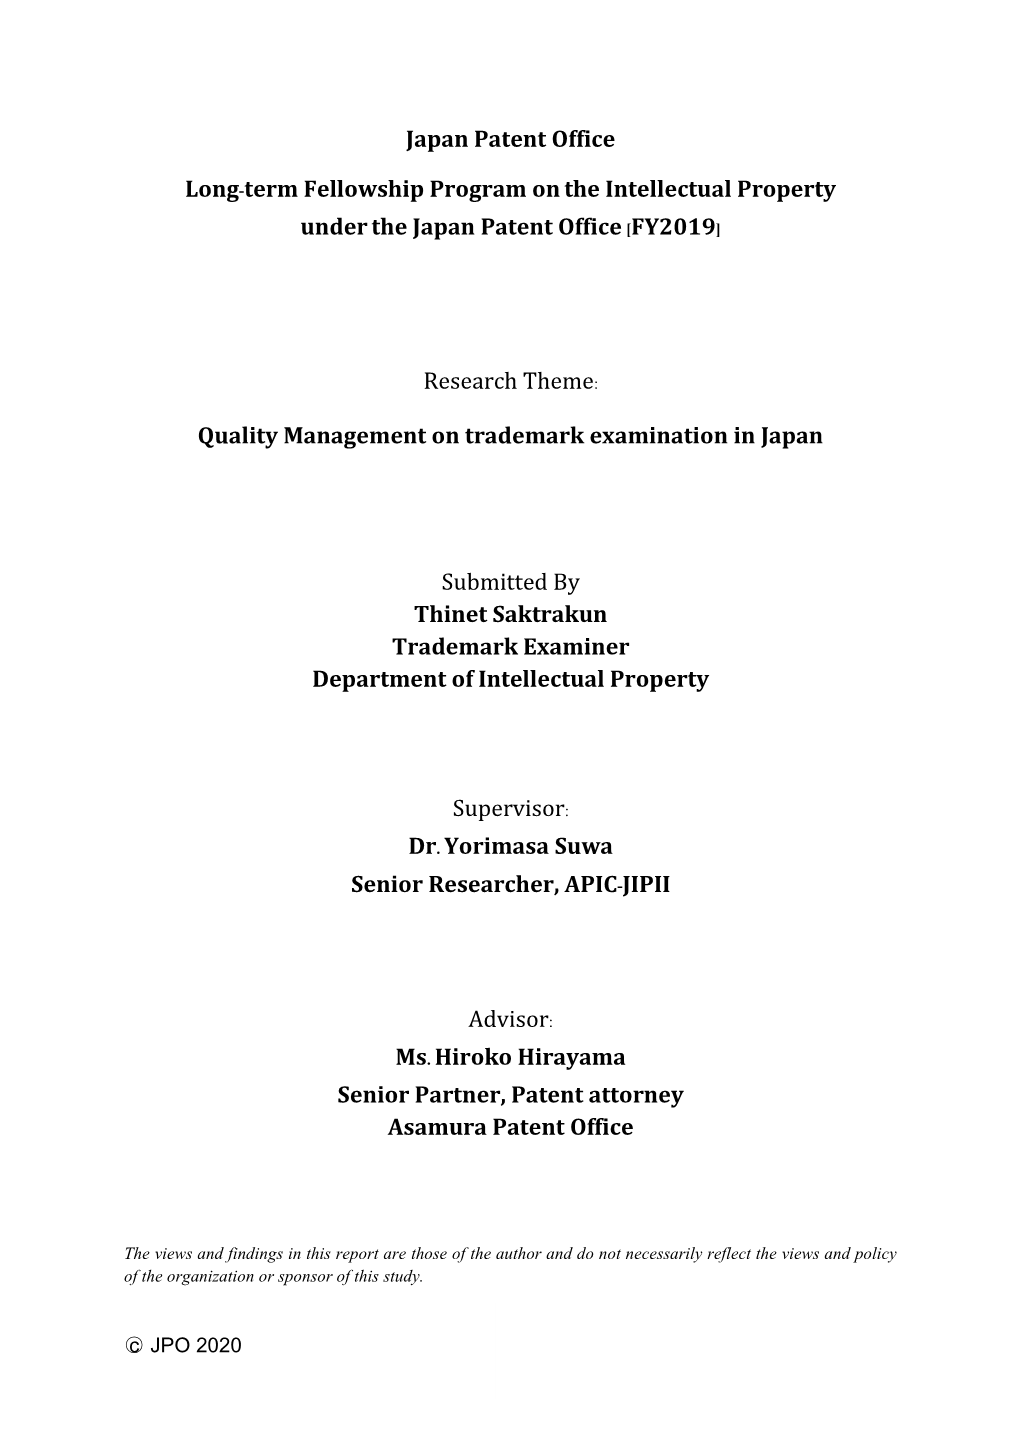 Japan Patent Office Long-Term Fellowship Program on The